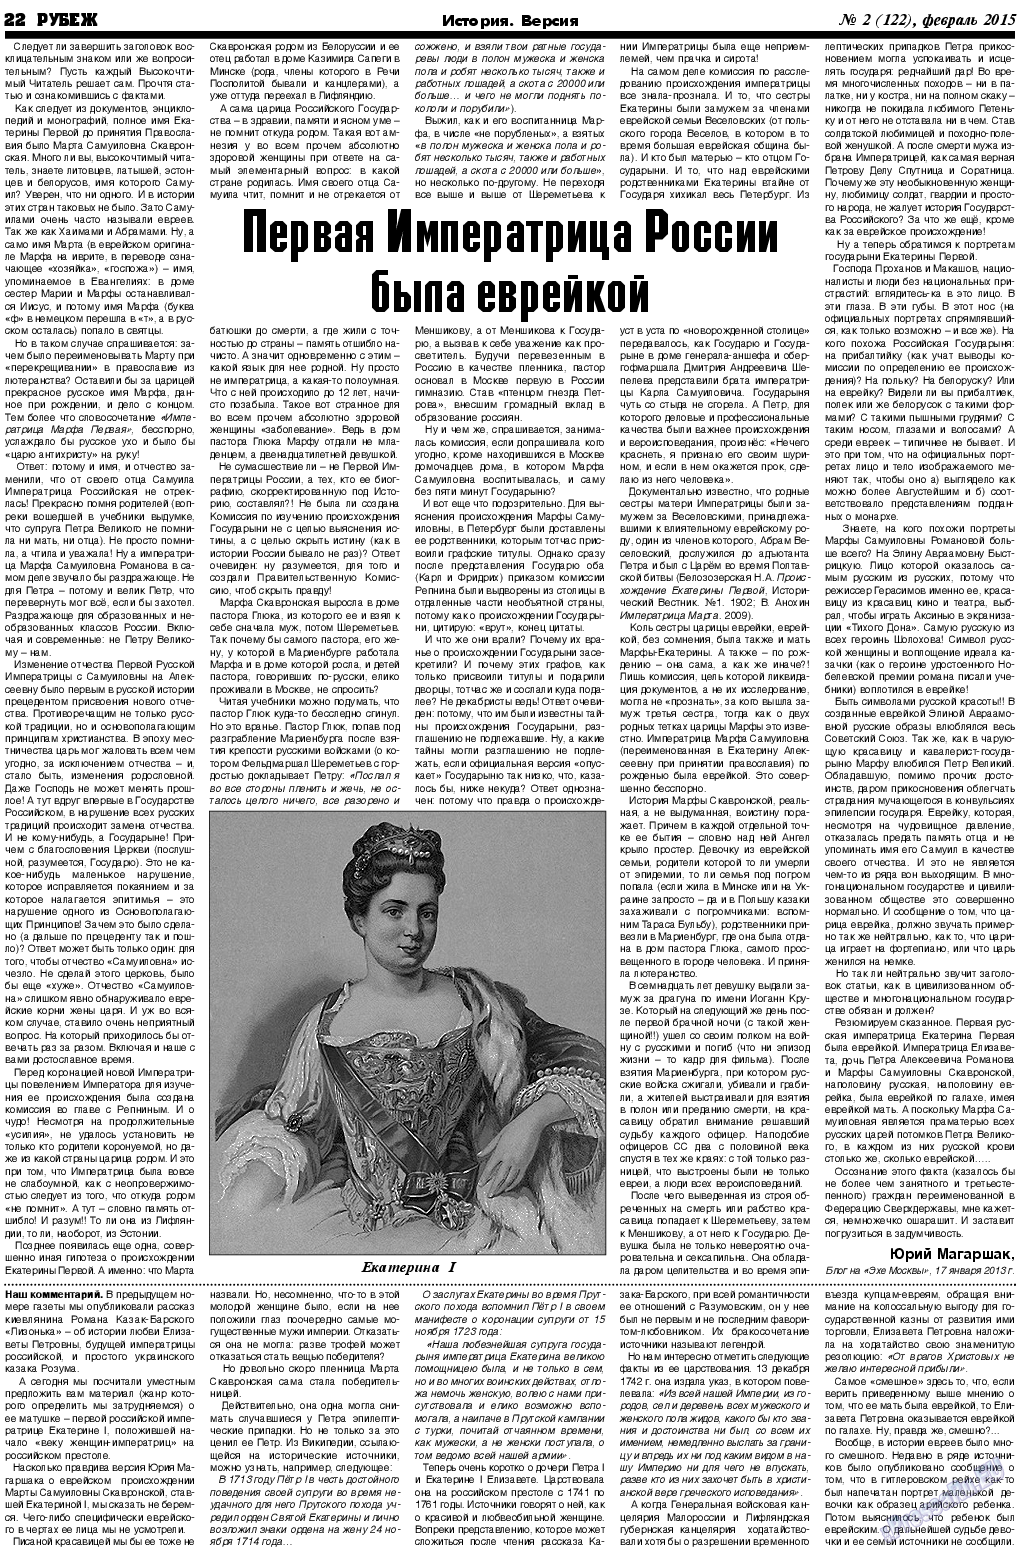 Рубеж, газета. 2015 №2 стр.22